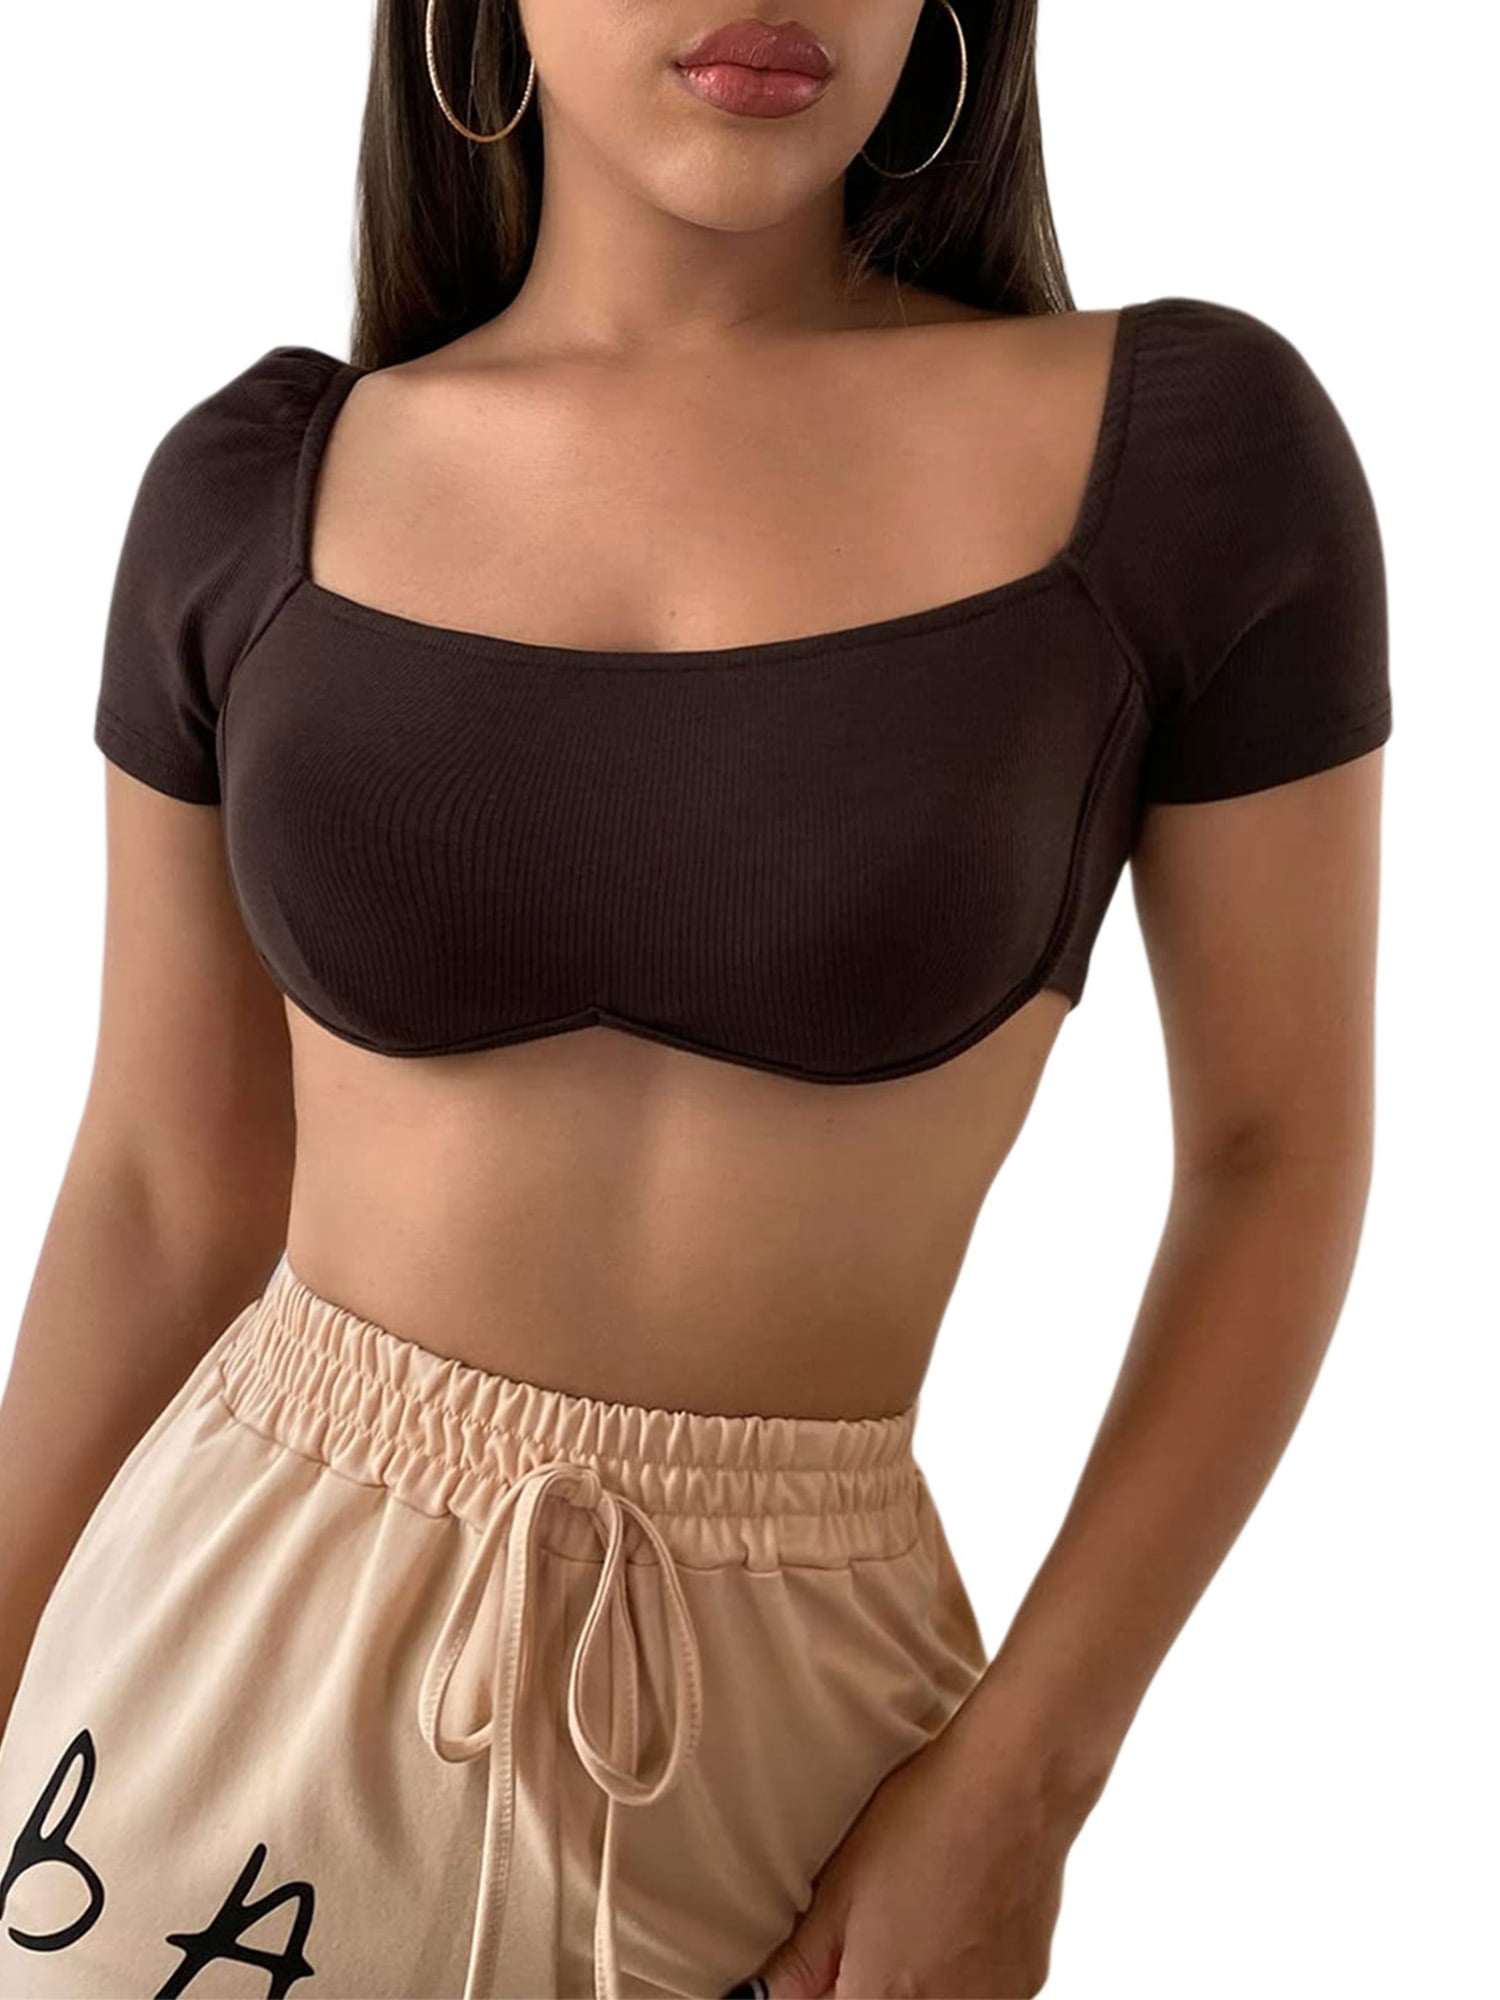 Pudcoco Ladies Summer Midriff-baring Tops, Slim Backless T-shirt Crop Top  S/M/L/XL